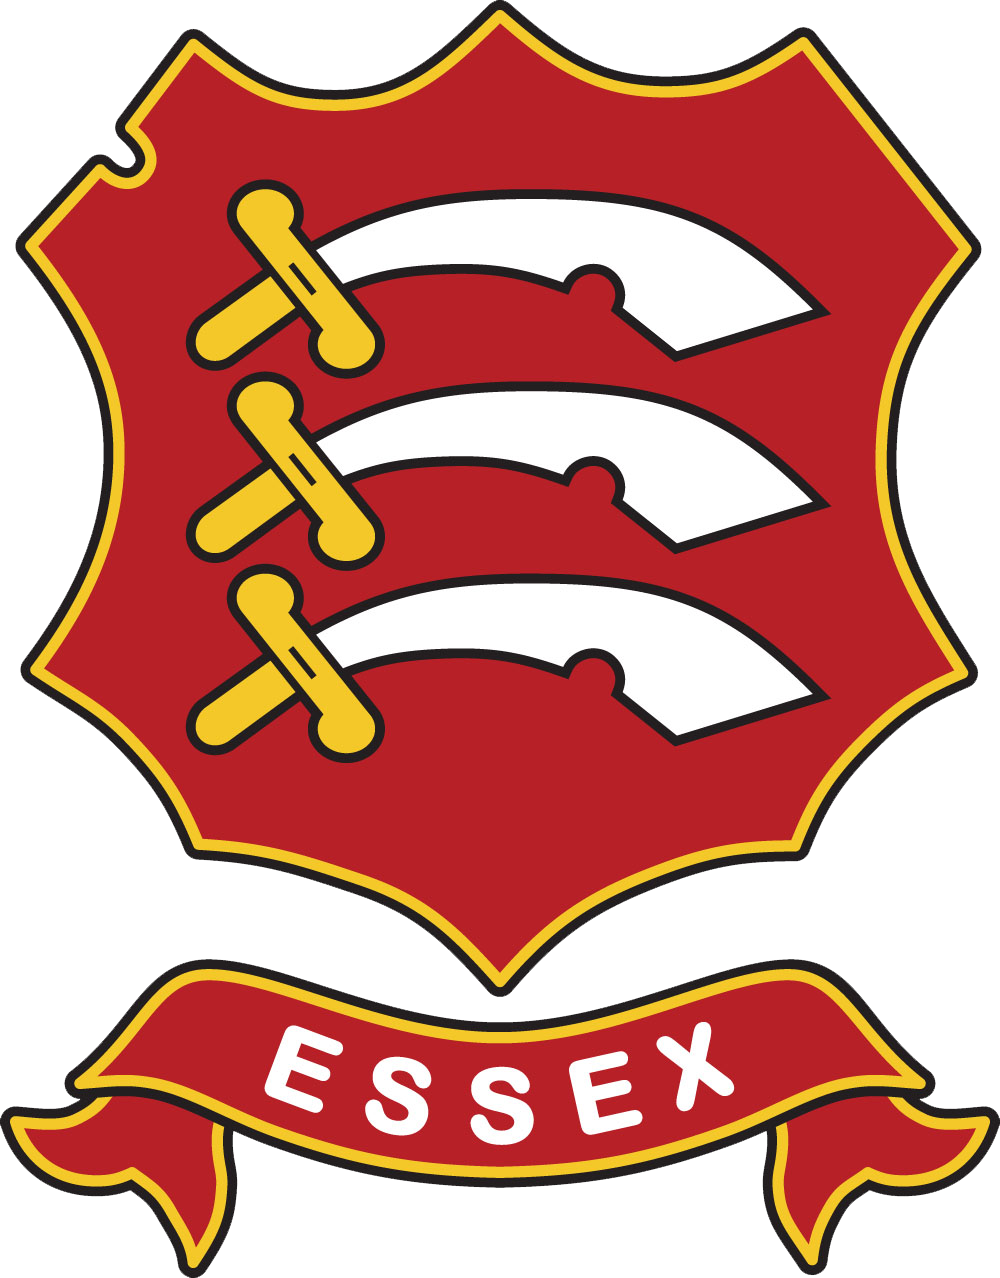 Essex Cricket Club